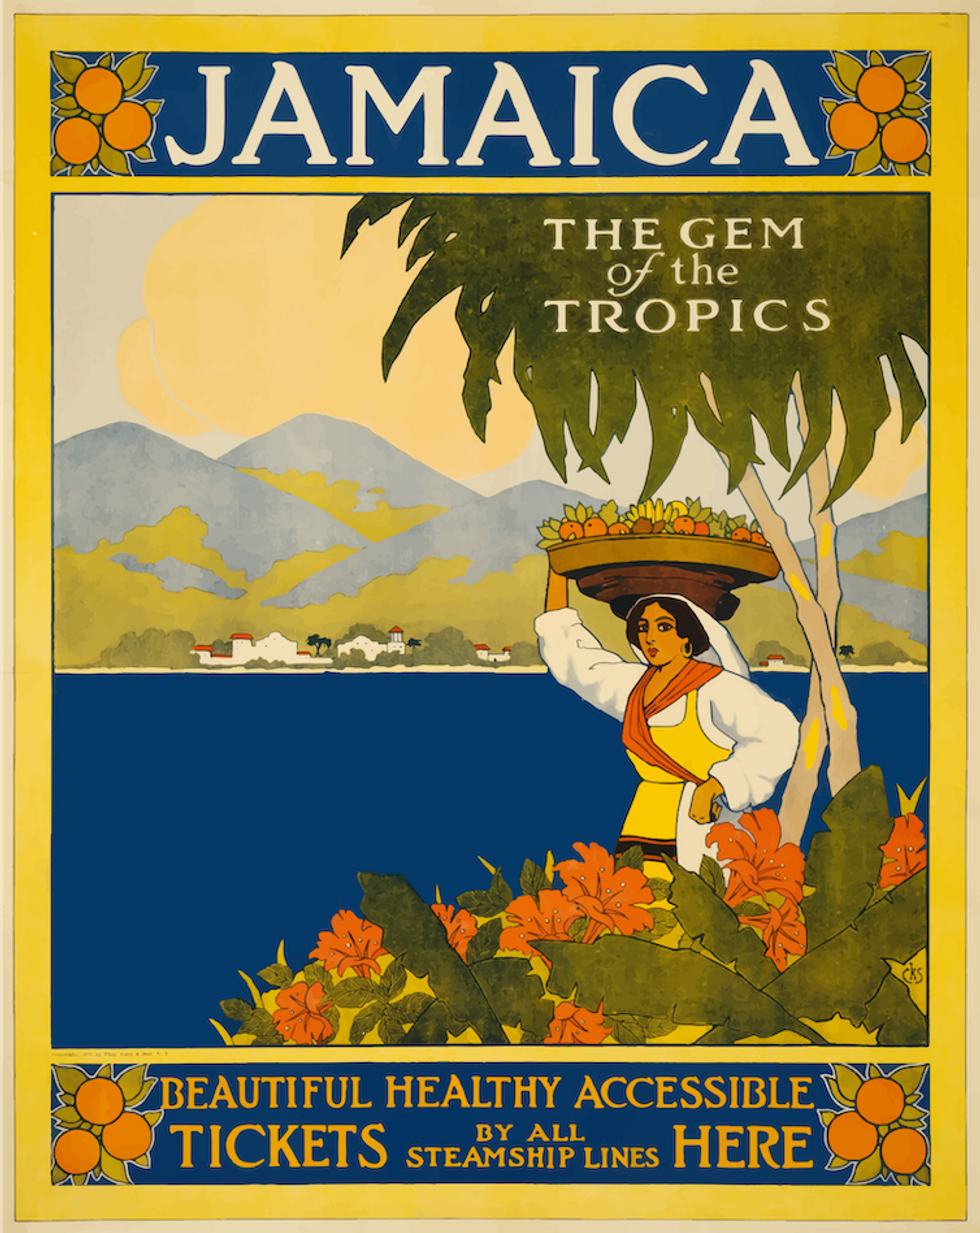 An image of a tourist poster advertising Jamaica as a destination